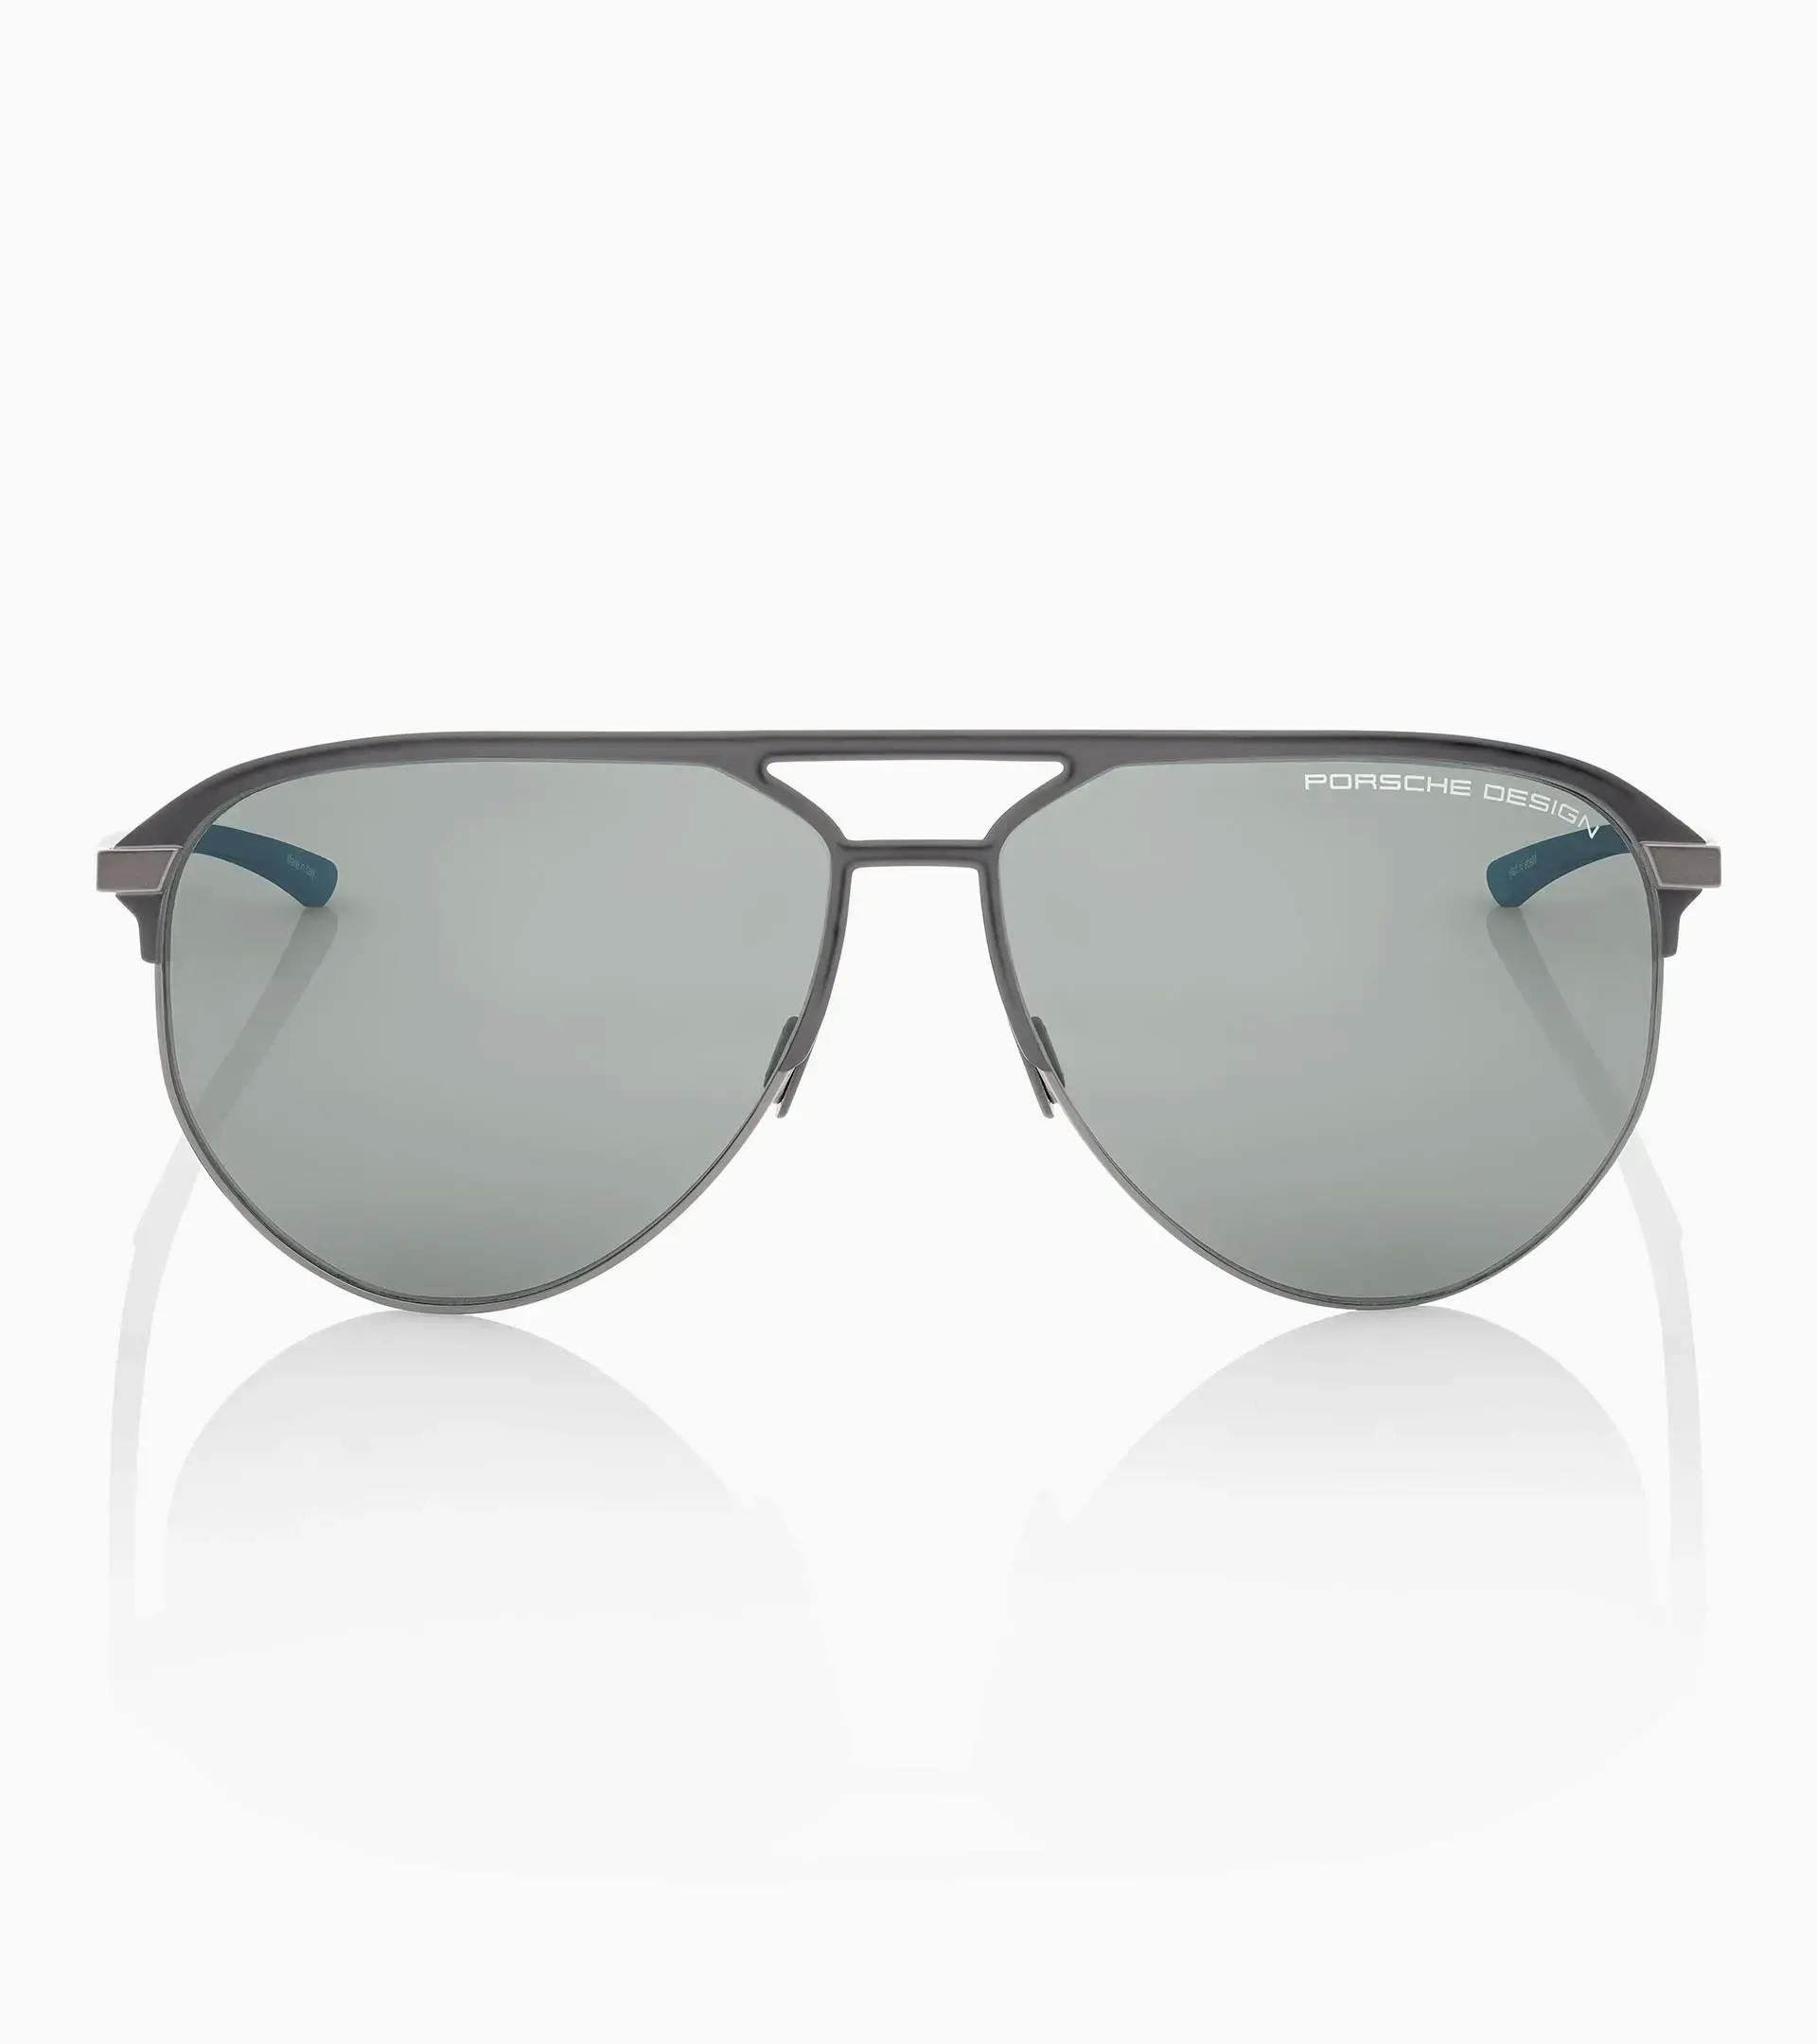 Sunglasses P´8965 Patrick Dempsey Ltd. Edition thumbnail 2